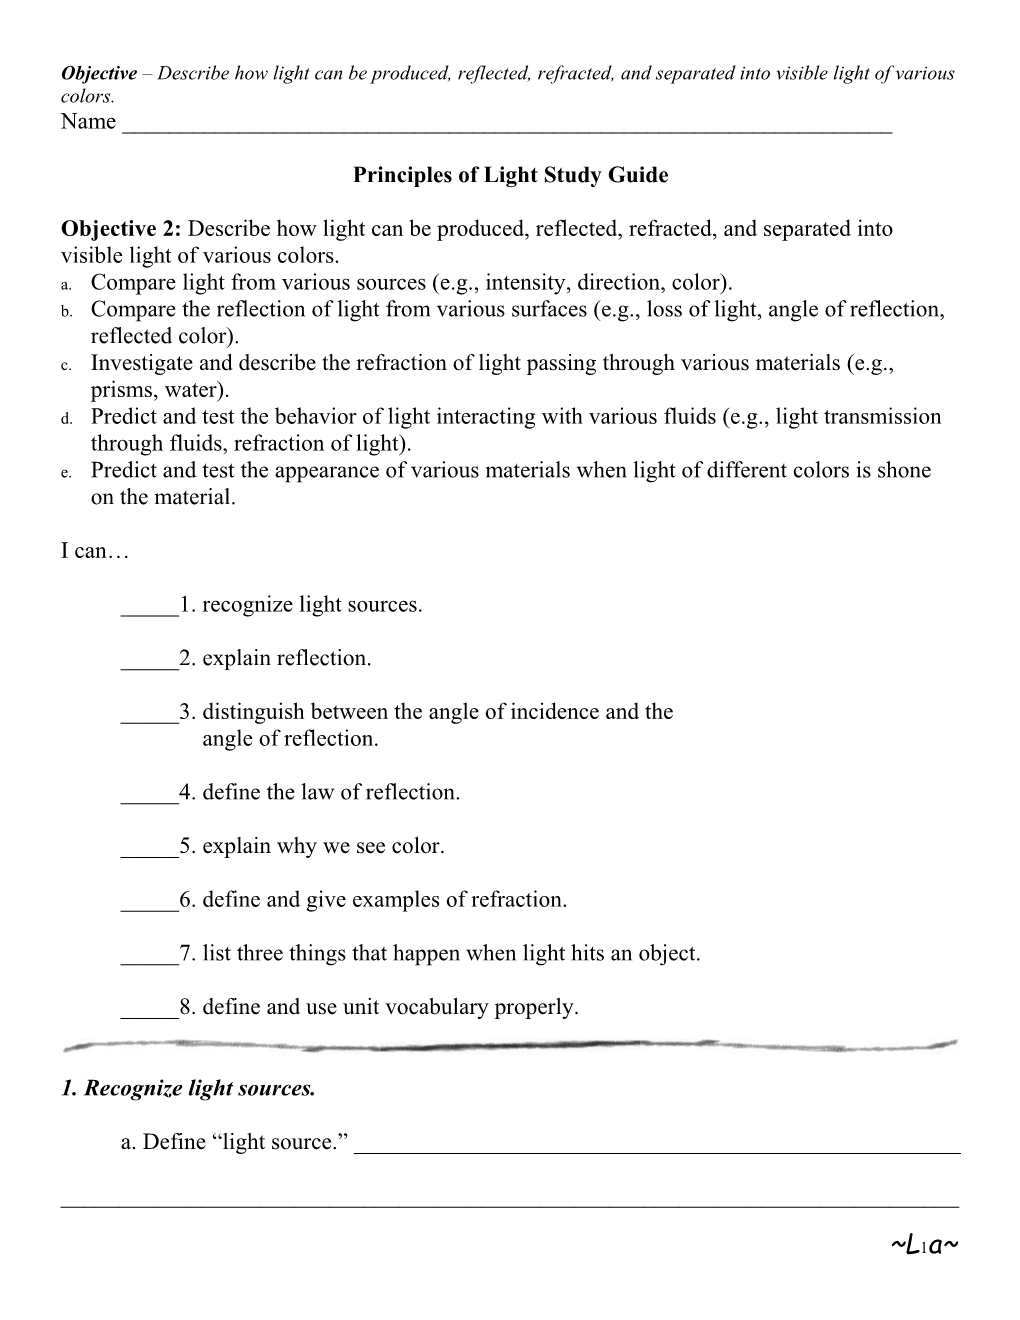 Principles of Lightstudy Guide